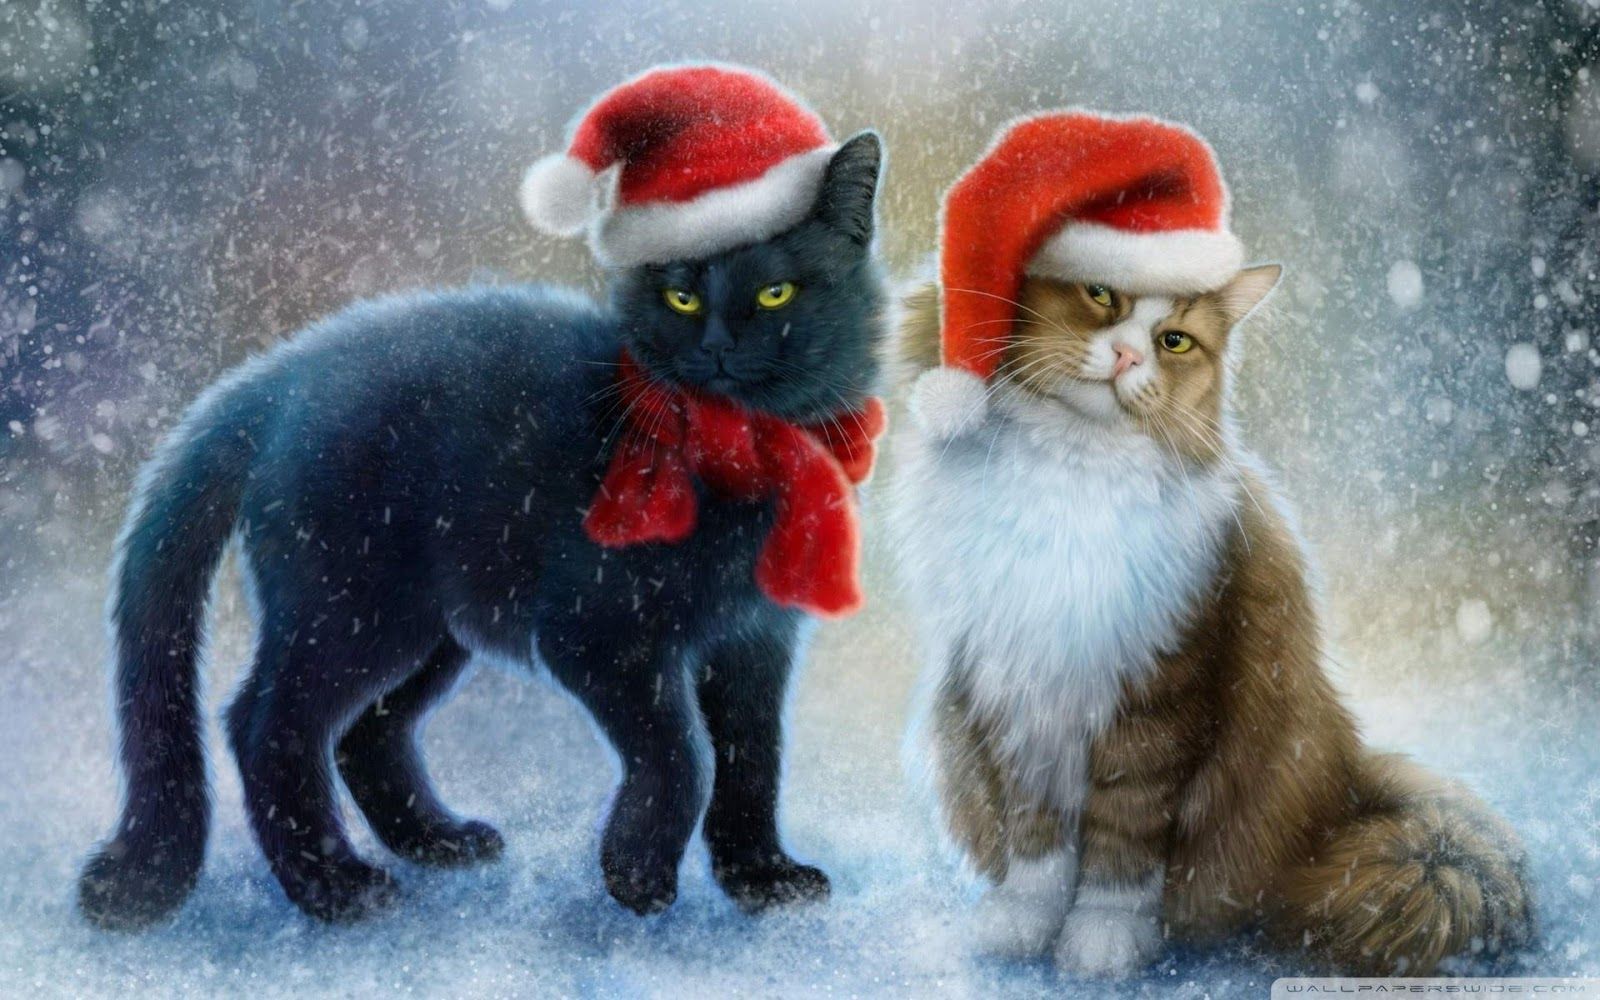 1080p HD Christmas Cat Wallpaper High Quality Desktop, iphone and android and Wallpap. Christmas cats, Cat wallpaper, Christmas photography backdrops